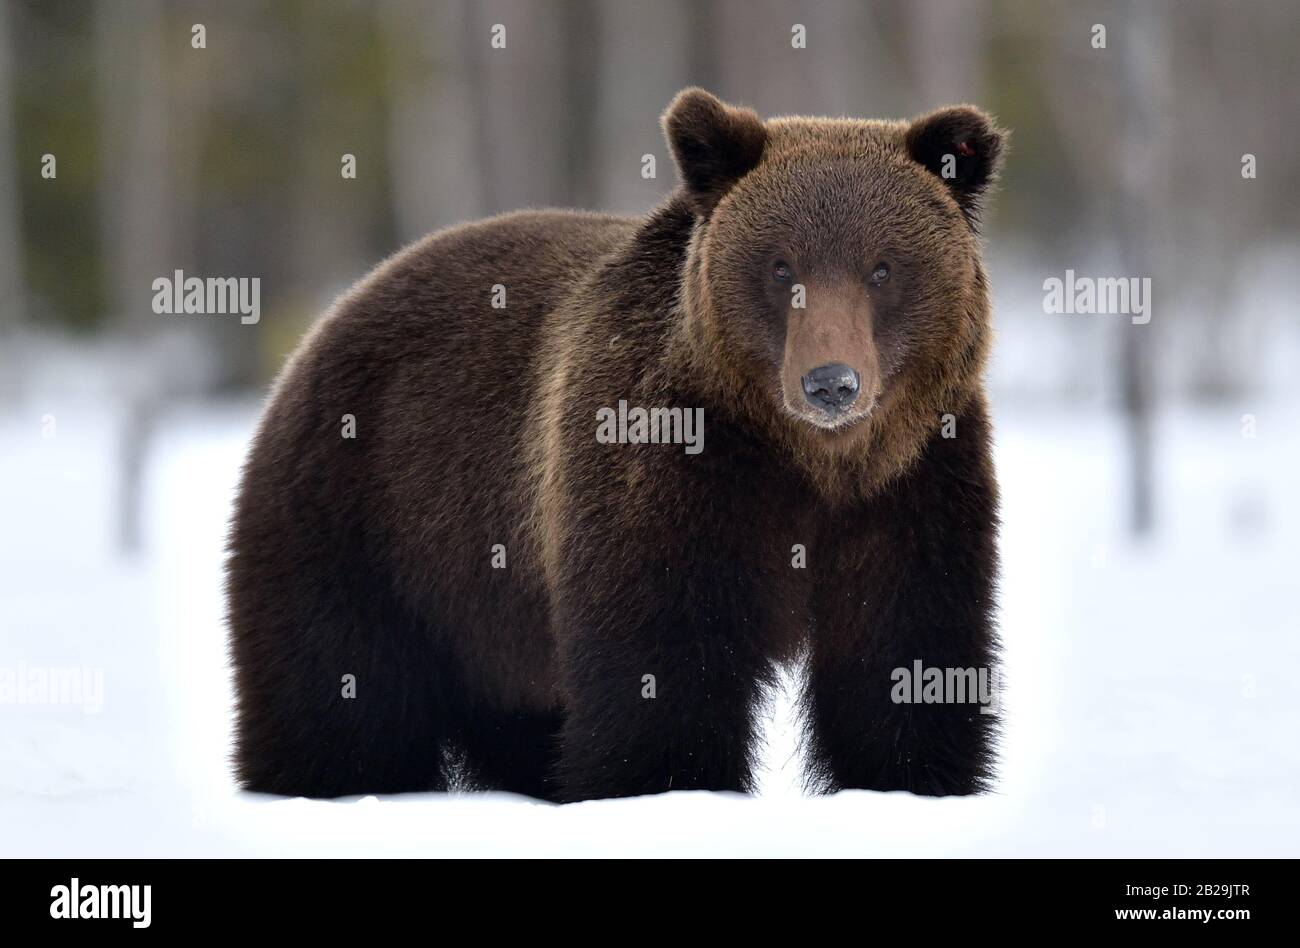 Wild Adult Brown bear in winter forest. Scientific name: Ursus Arctos. Natural Habitat. Stock Photo